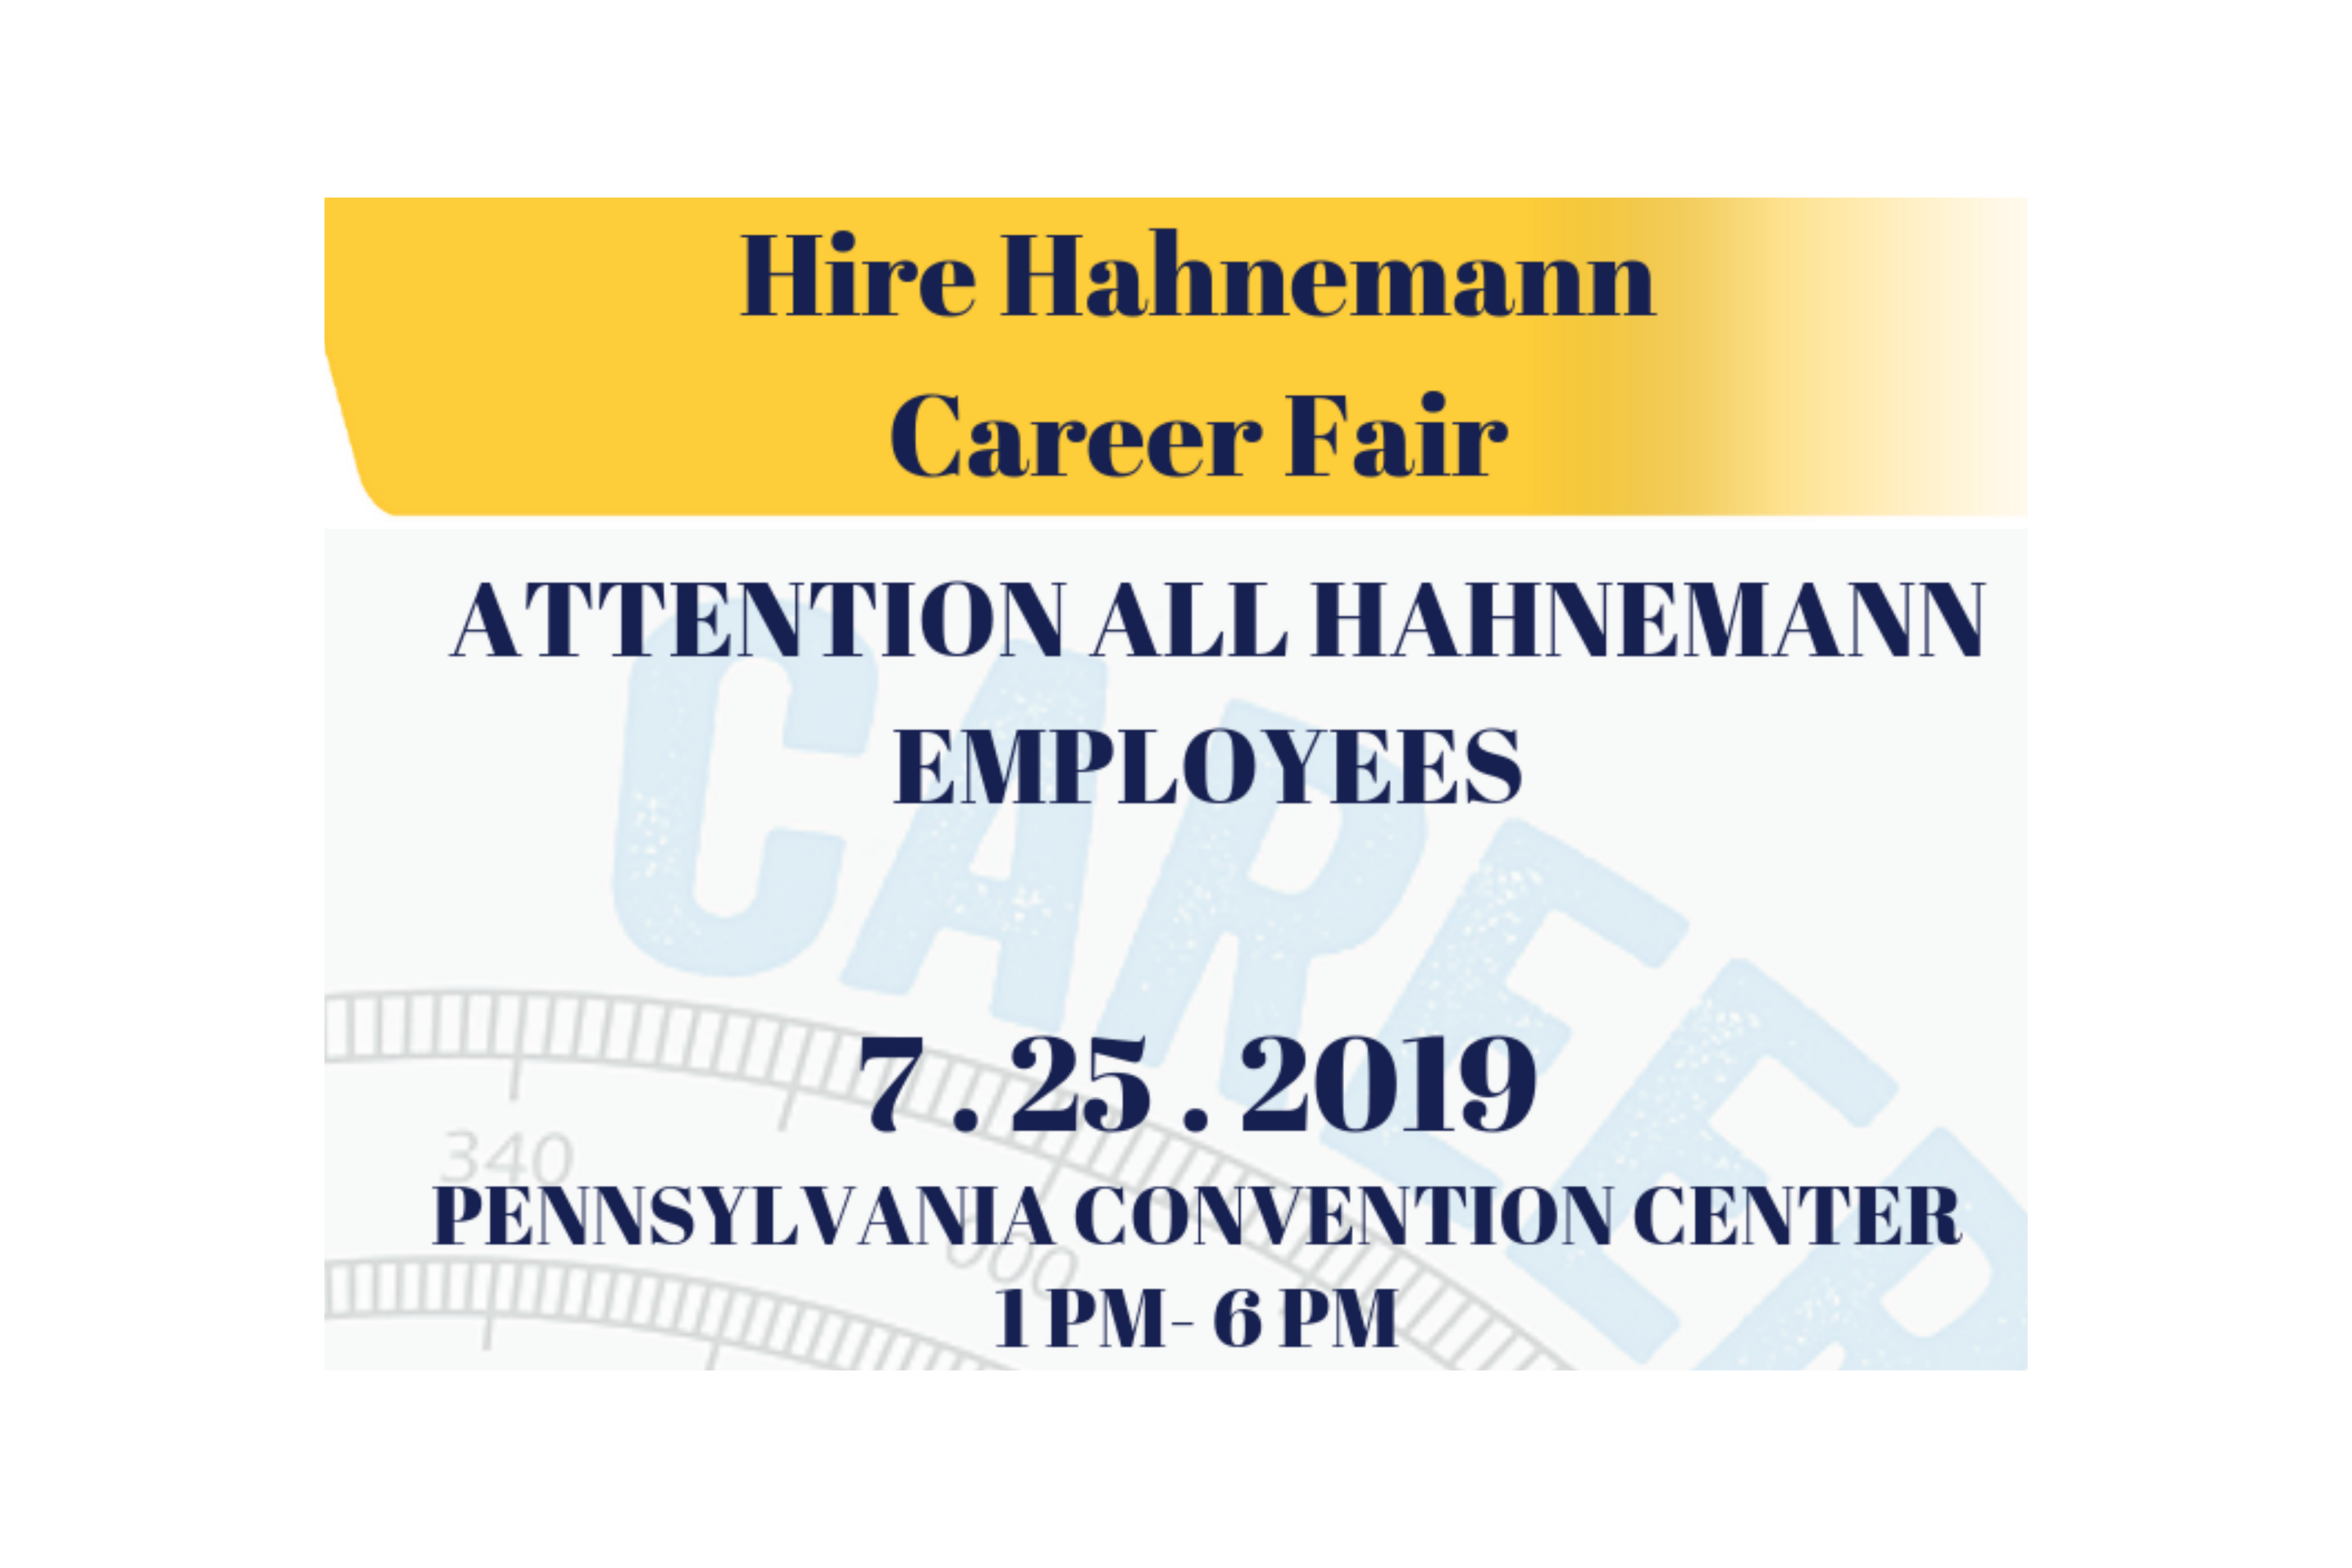 Hire Hahnemann Career Fair banner